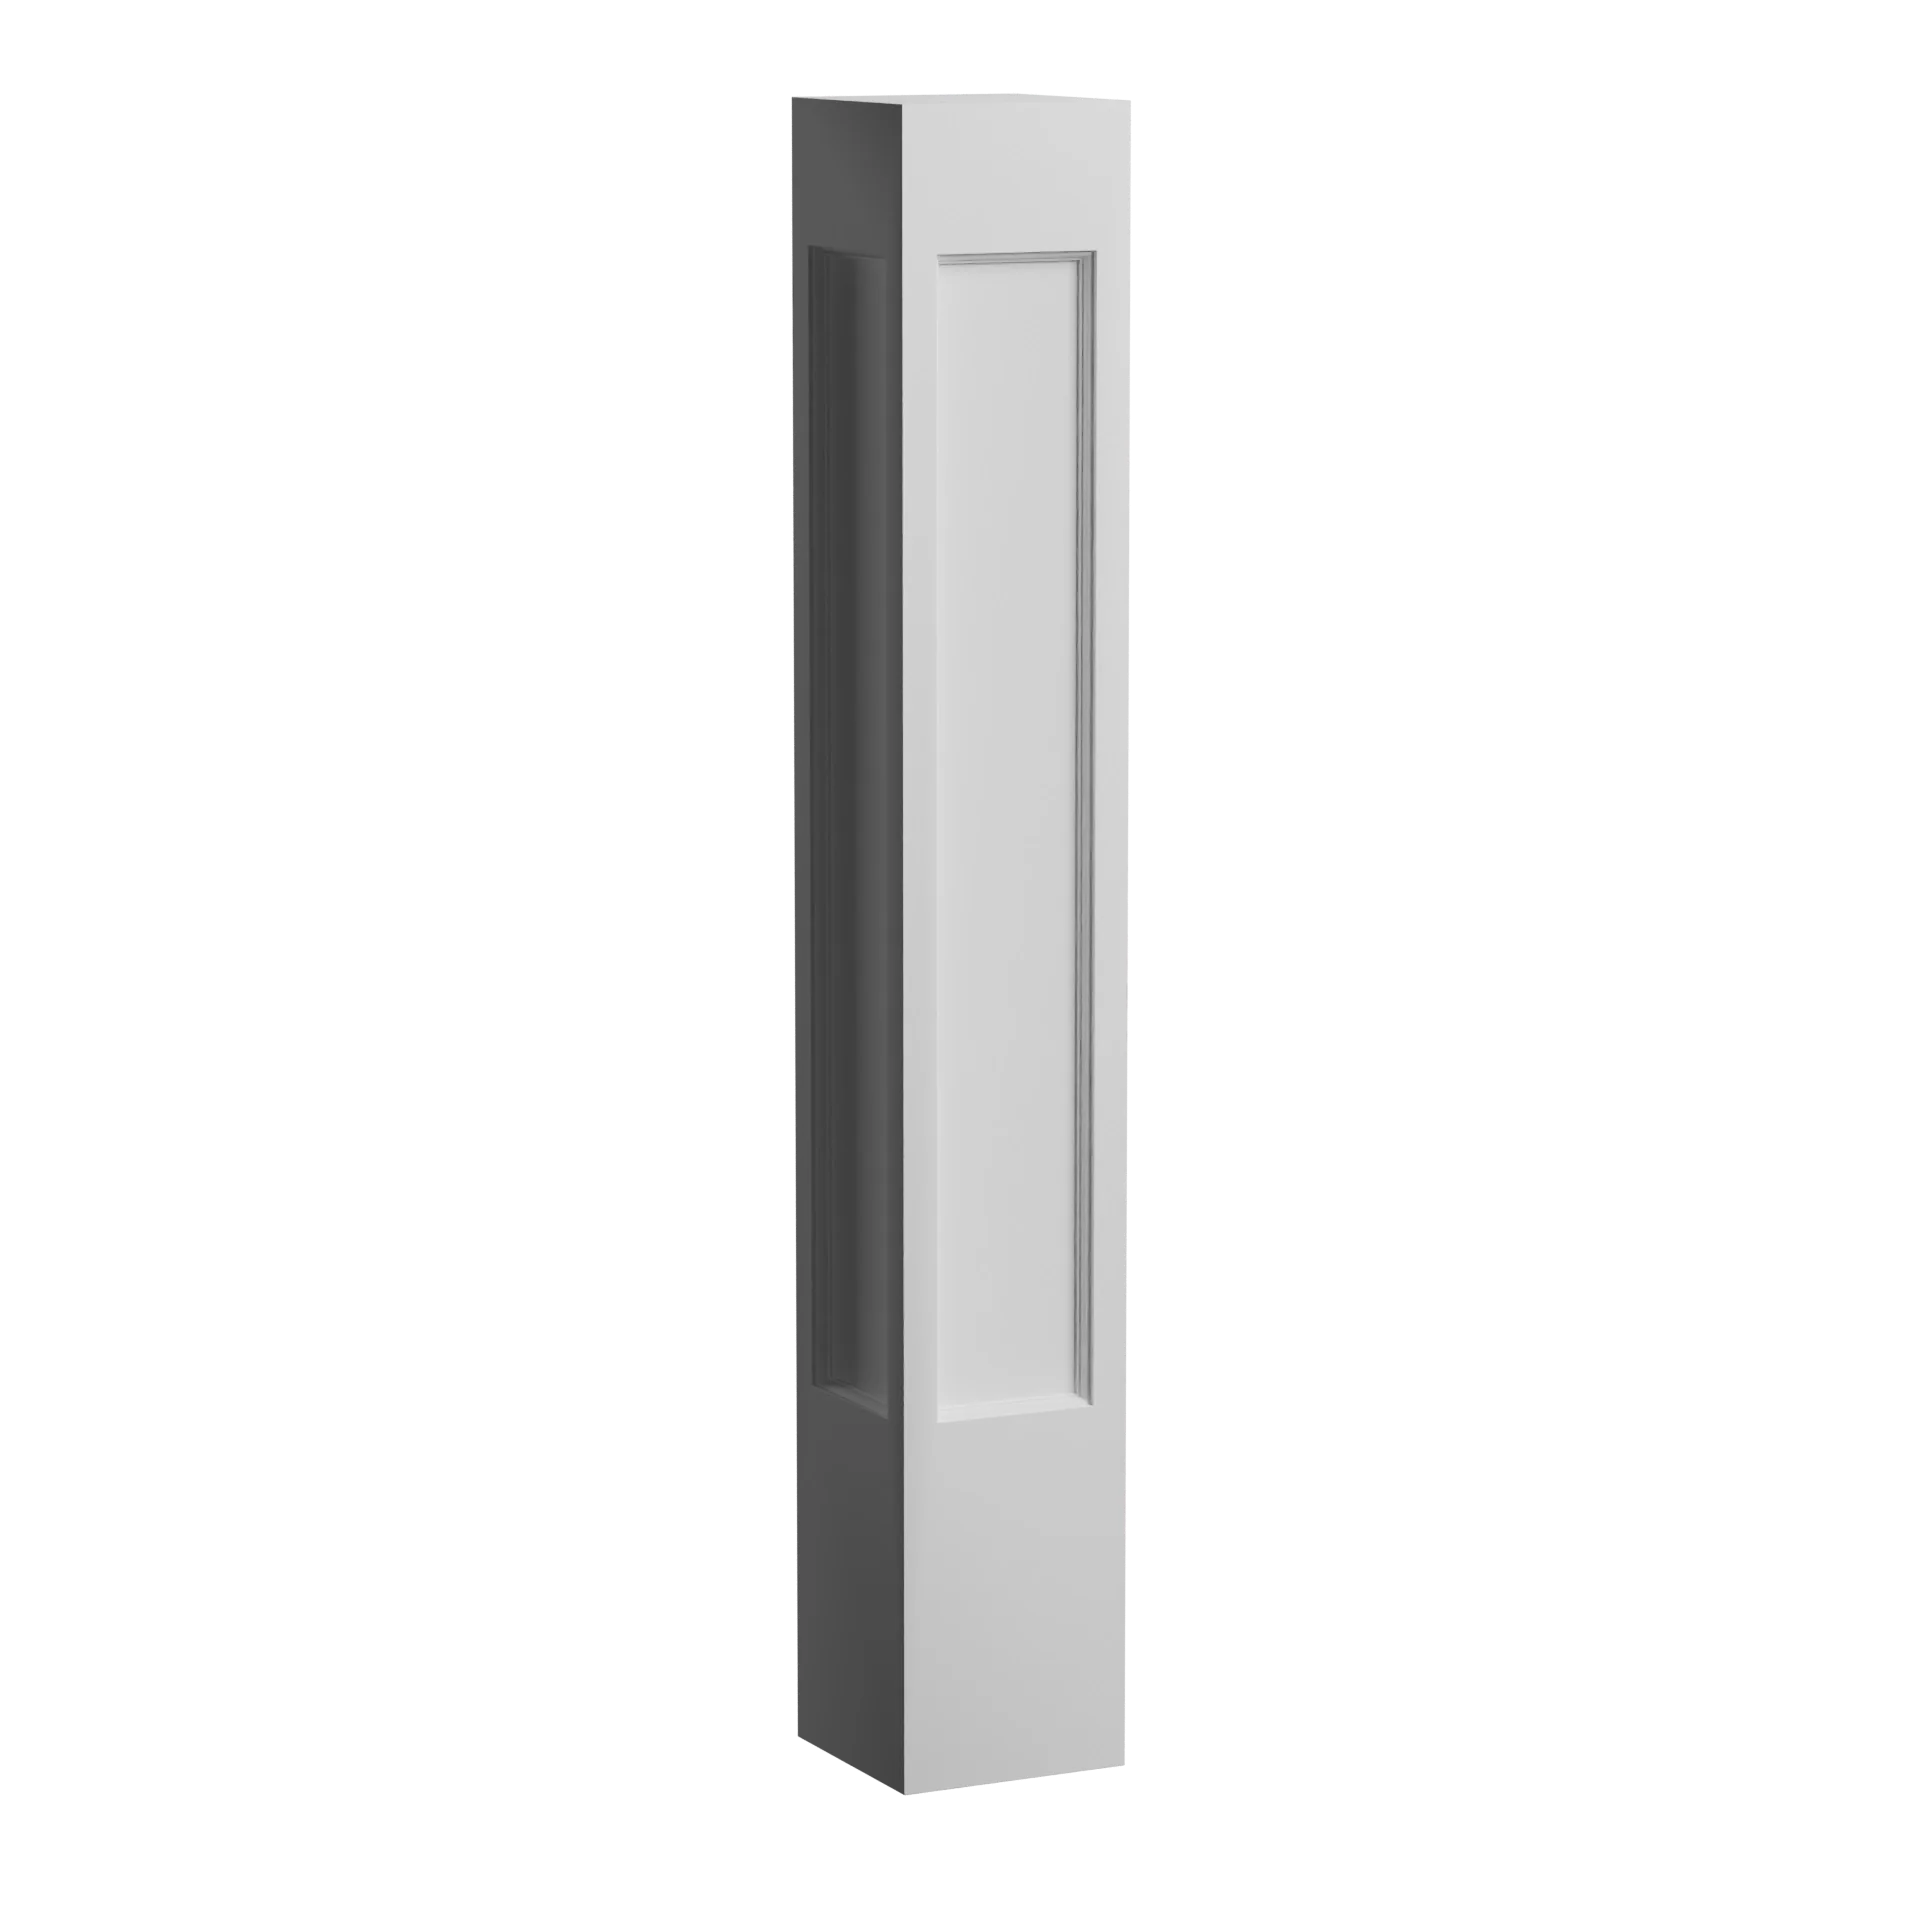 8 Inch W x 48 Inch H Recessed Flat Panel Newel Post Corner